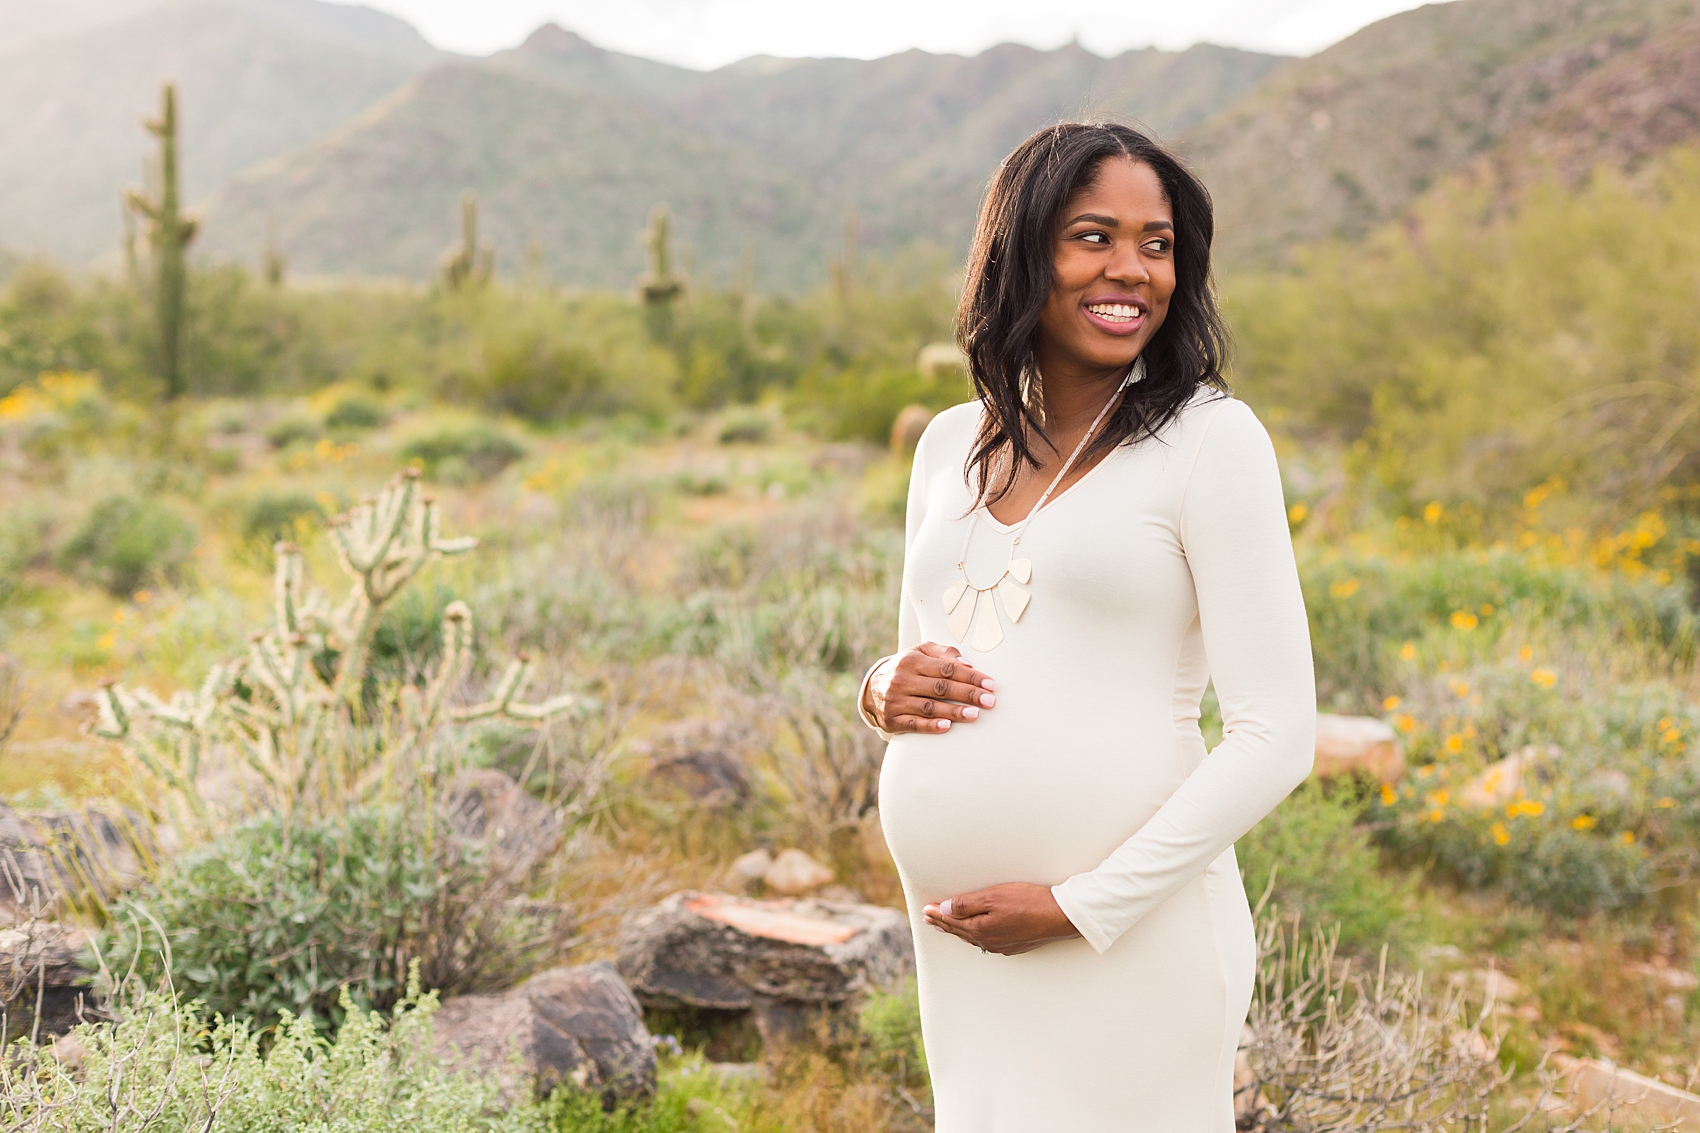 Leah Hope Photography | Scottsdale Phoenix Arizona Photographer | White Tank Mountains Regional Park | Desert Landscape Cactus Scenery | Maternity Photos | Pregnancy Pictures